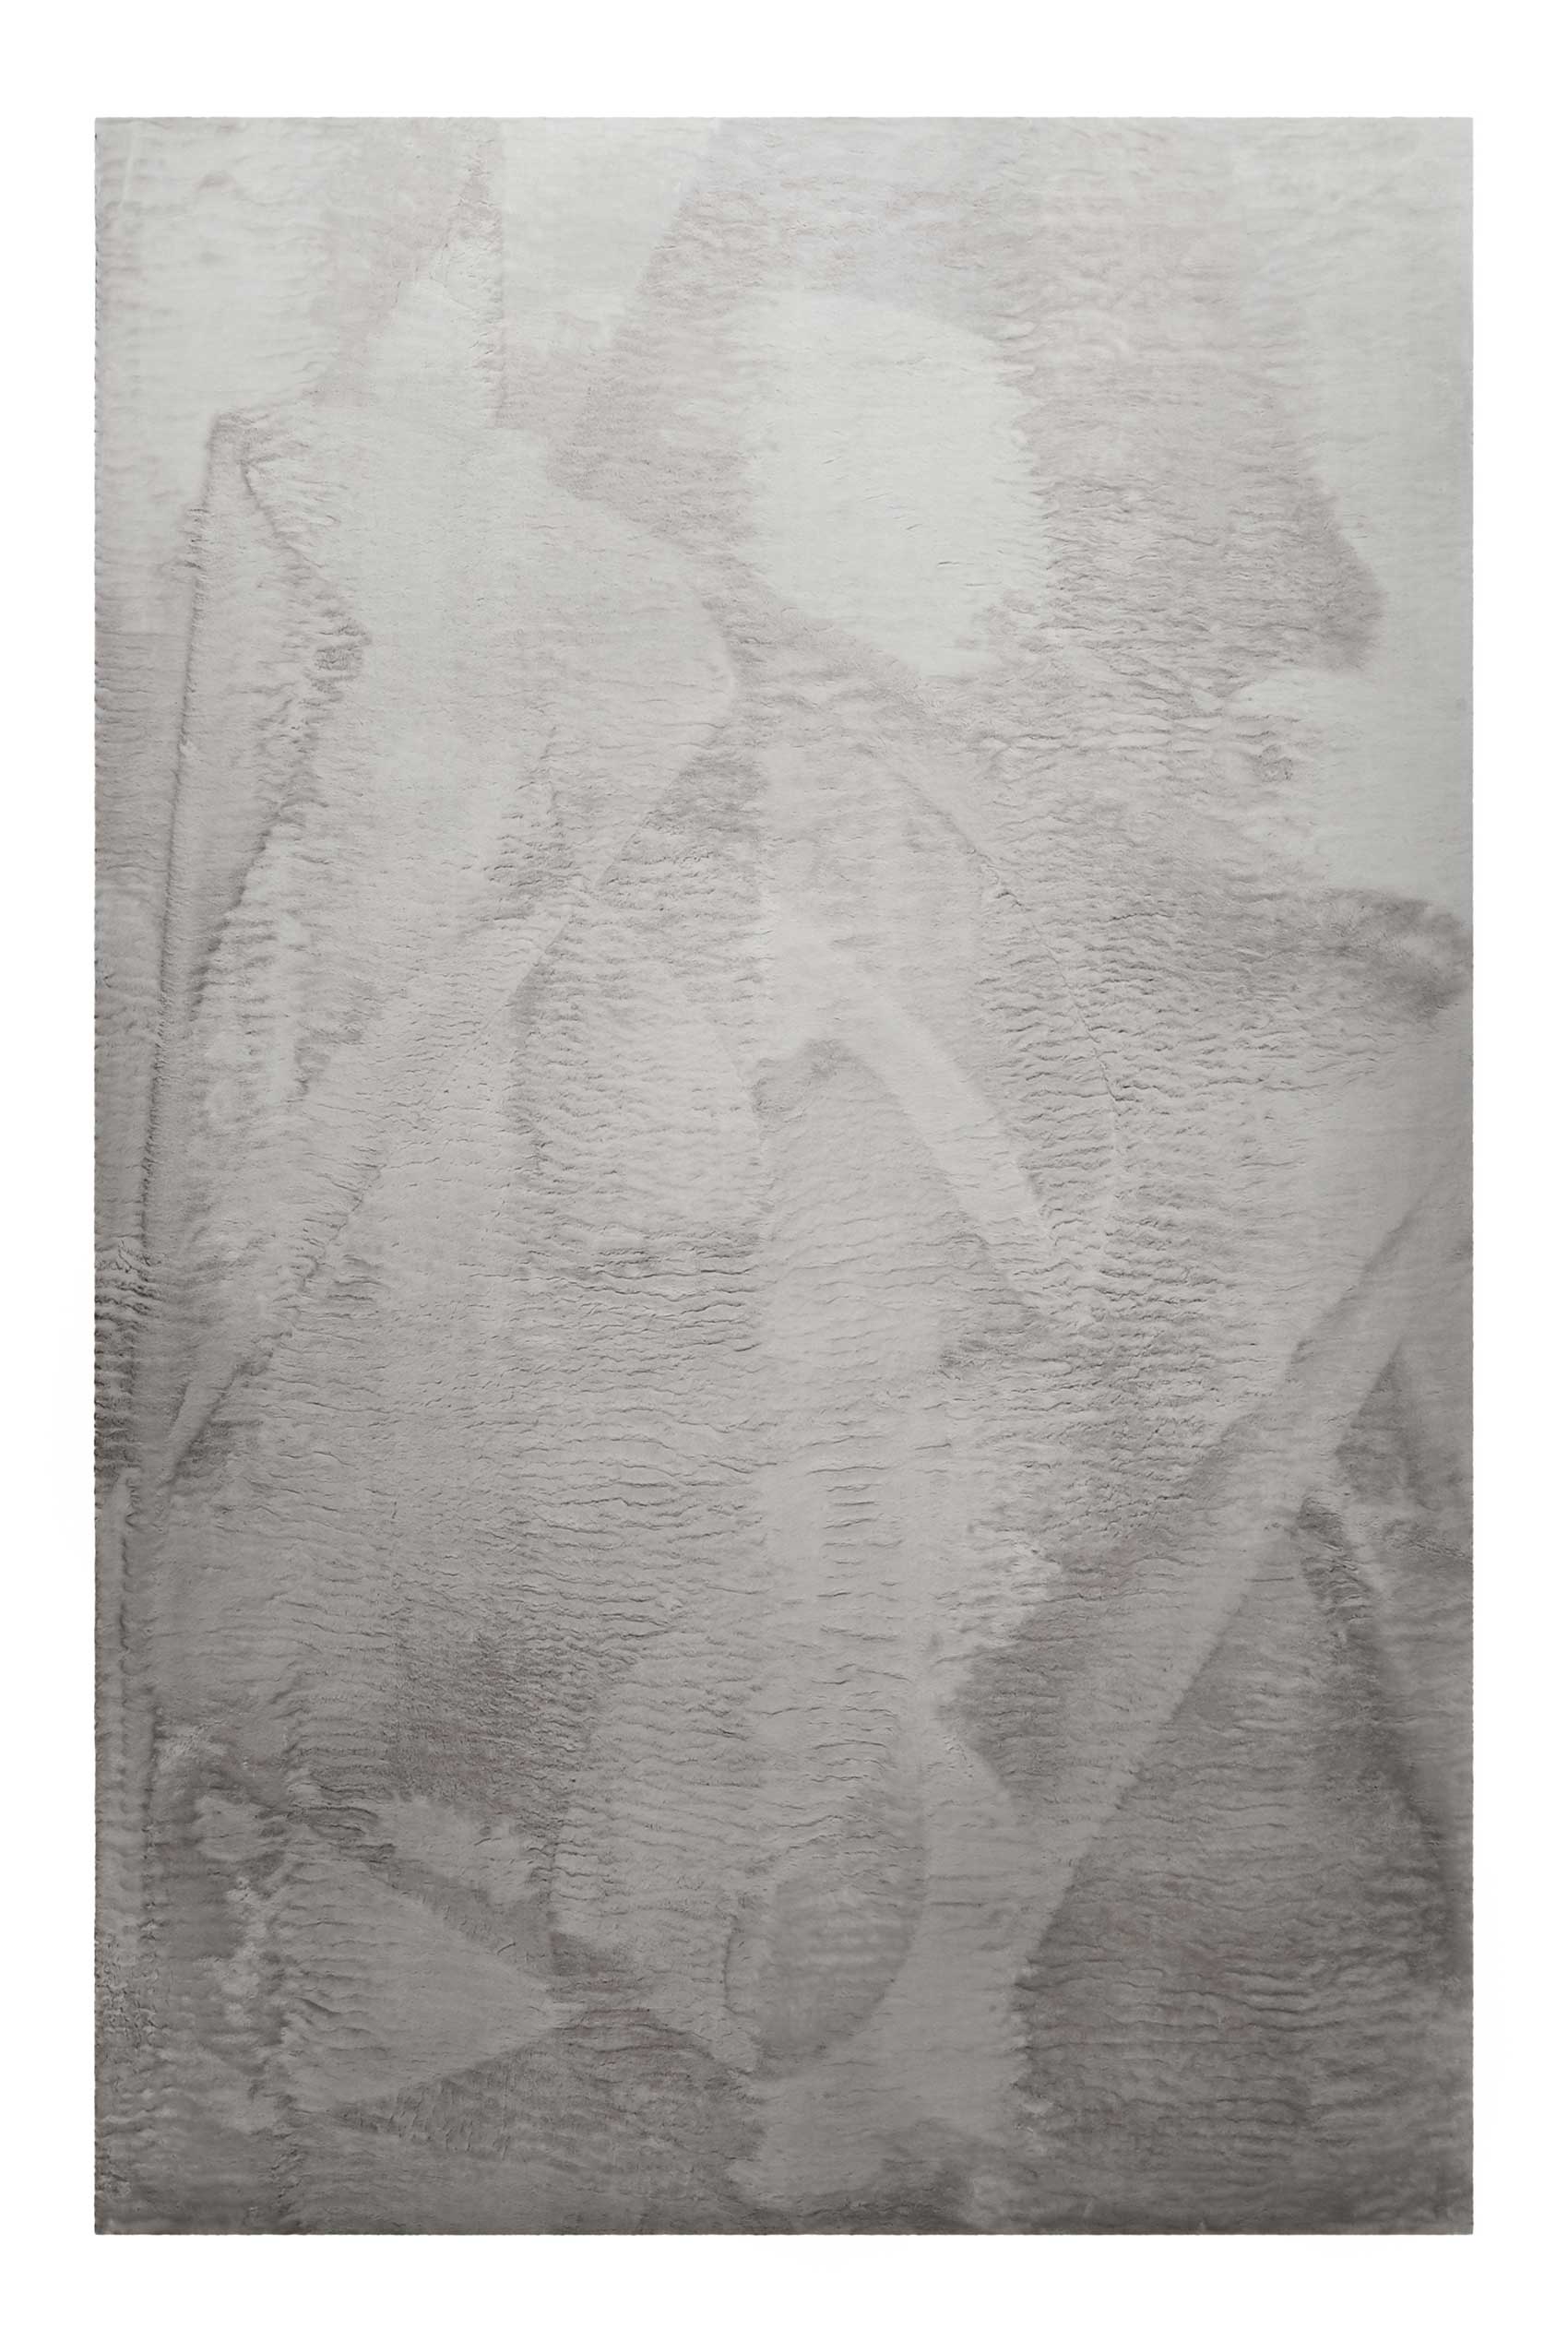 Tapis tufté mèches rases (15mm) gris clair 160x225